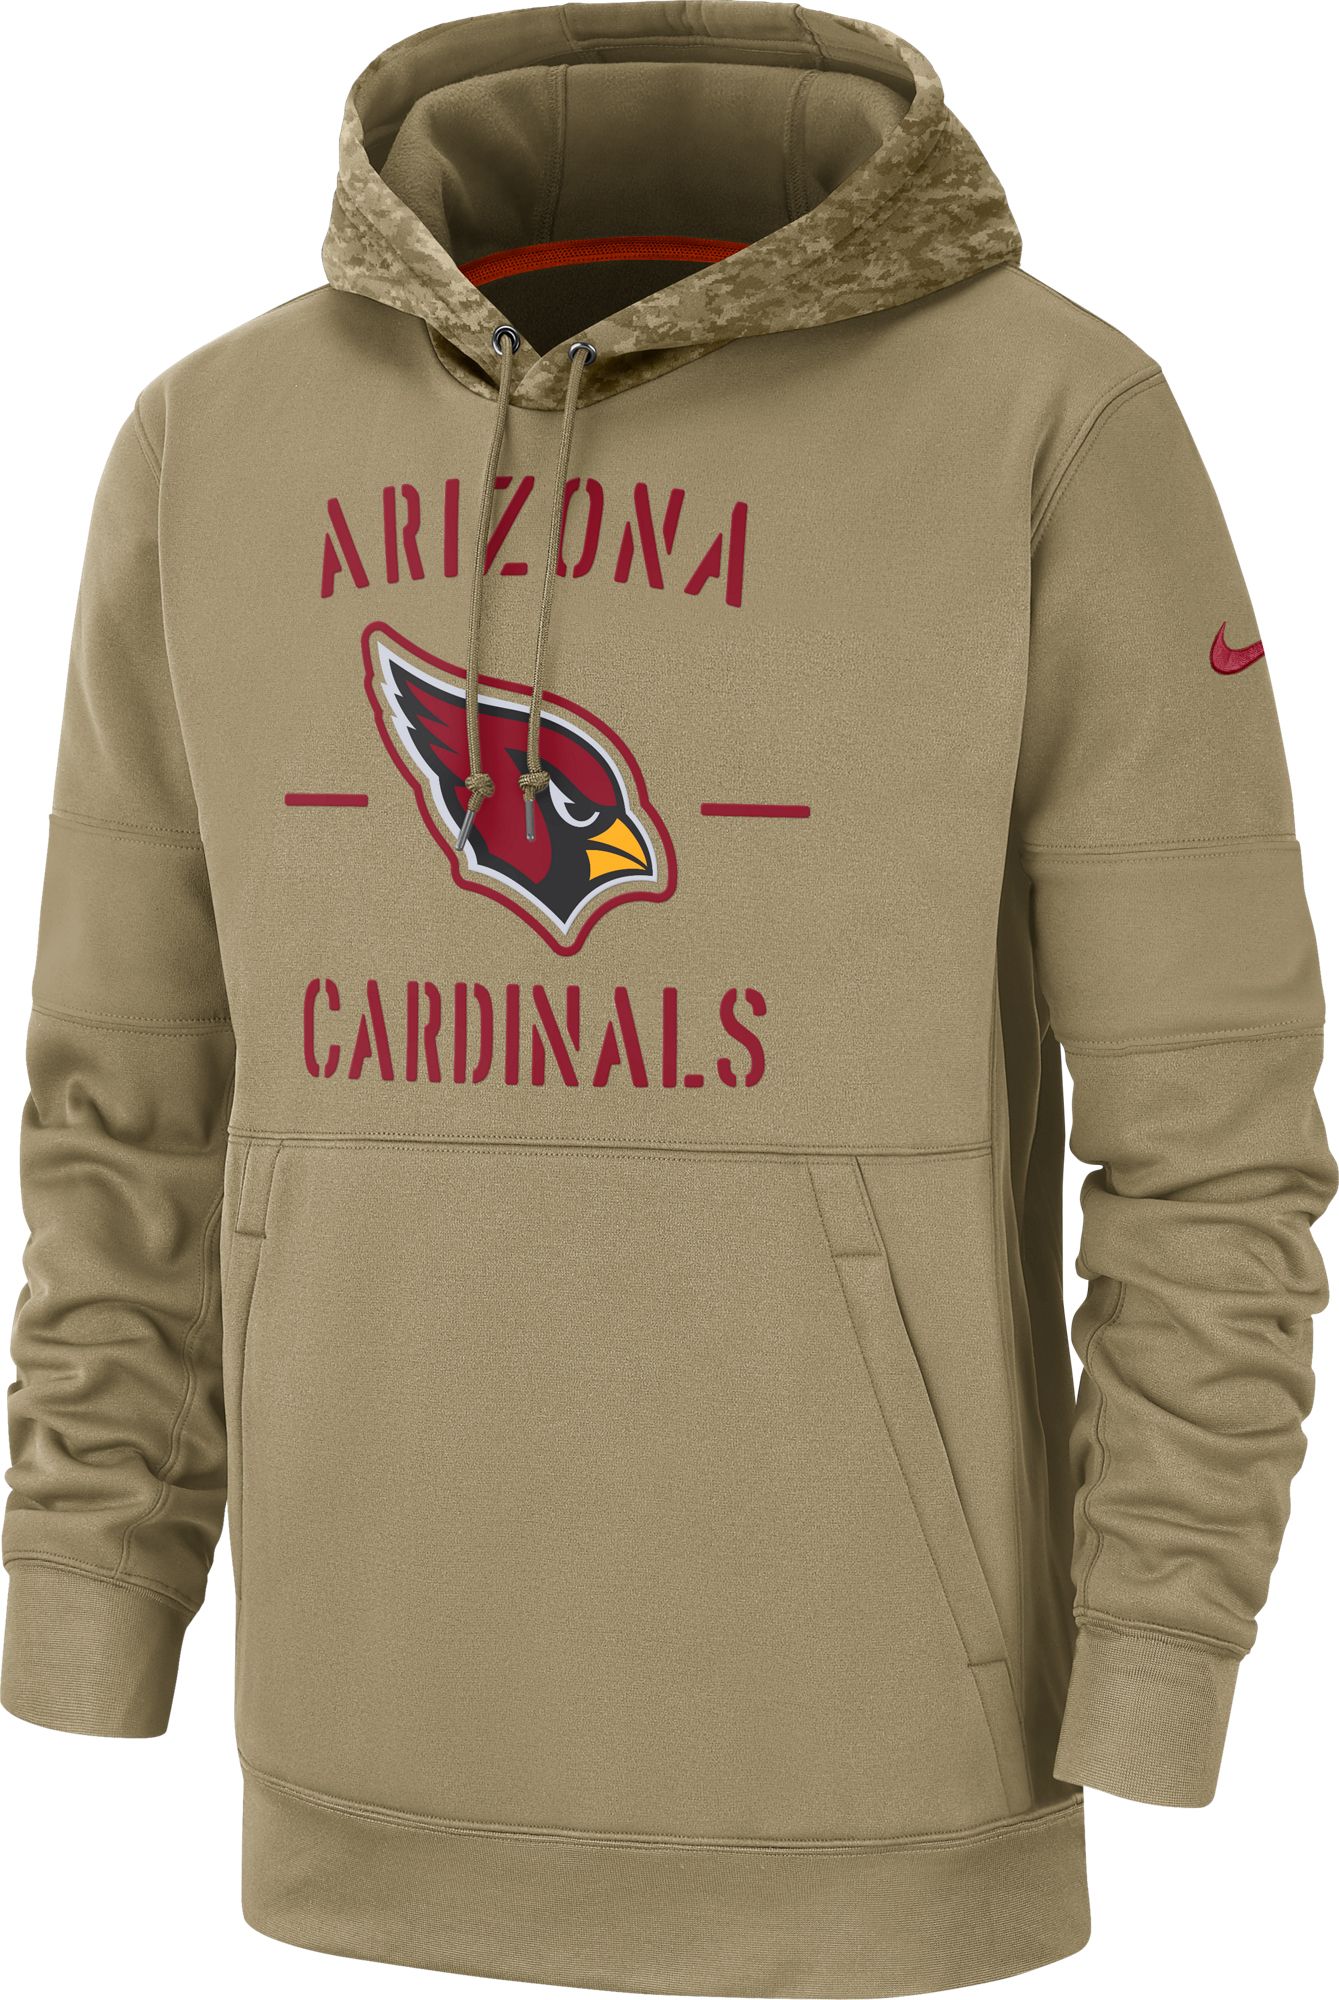 az cardinals camo hoodie